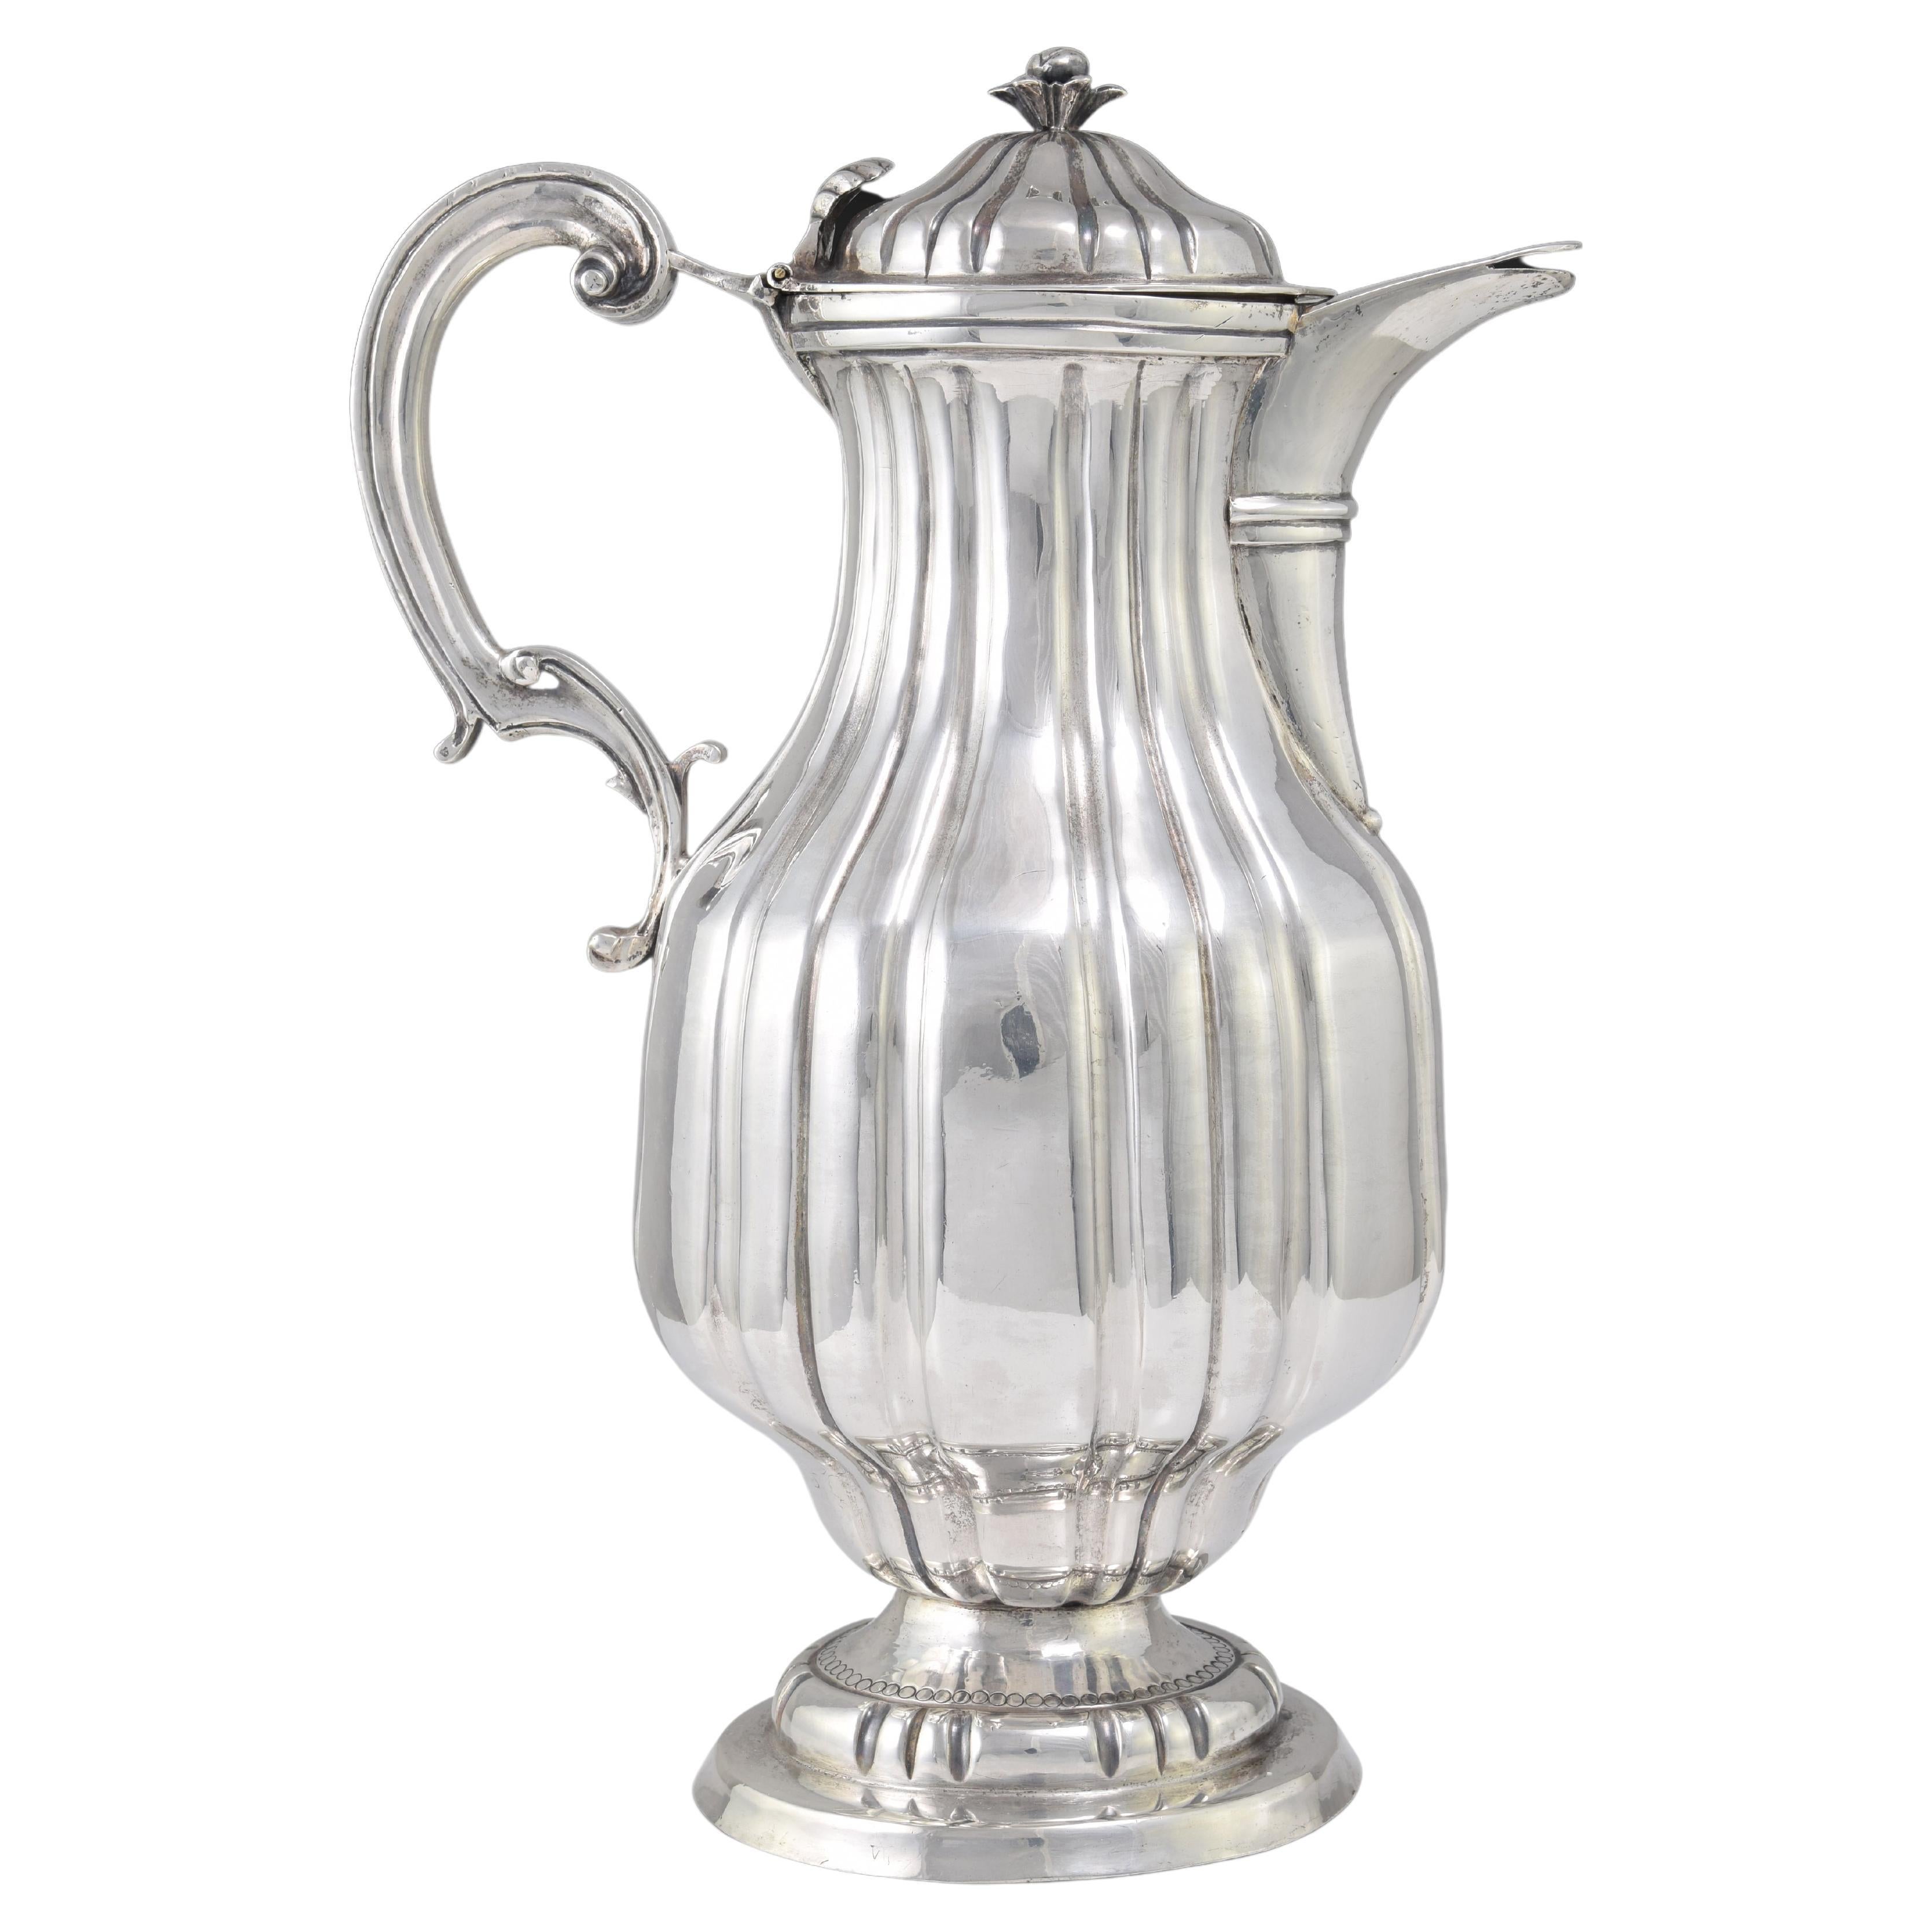 Silver jar or jug. MARTINEZ MORENO, Mateo. Cordoba, Spain, possibly 1797. For Sale